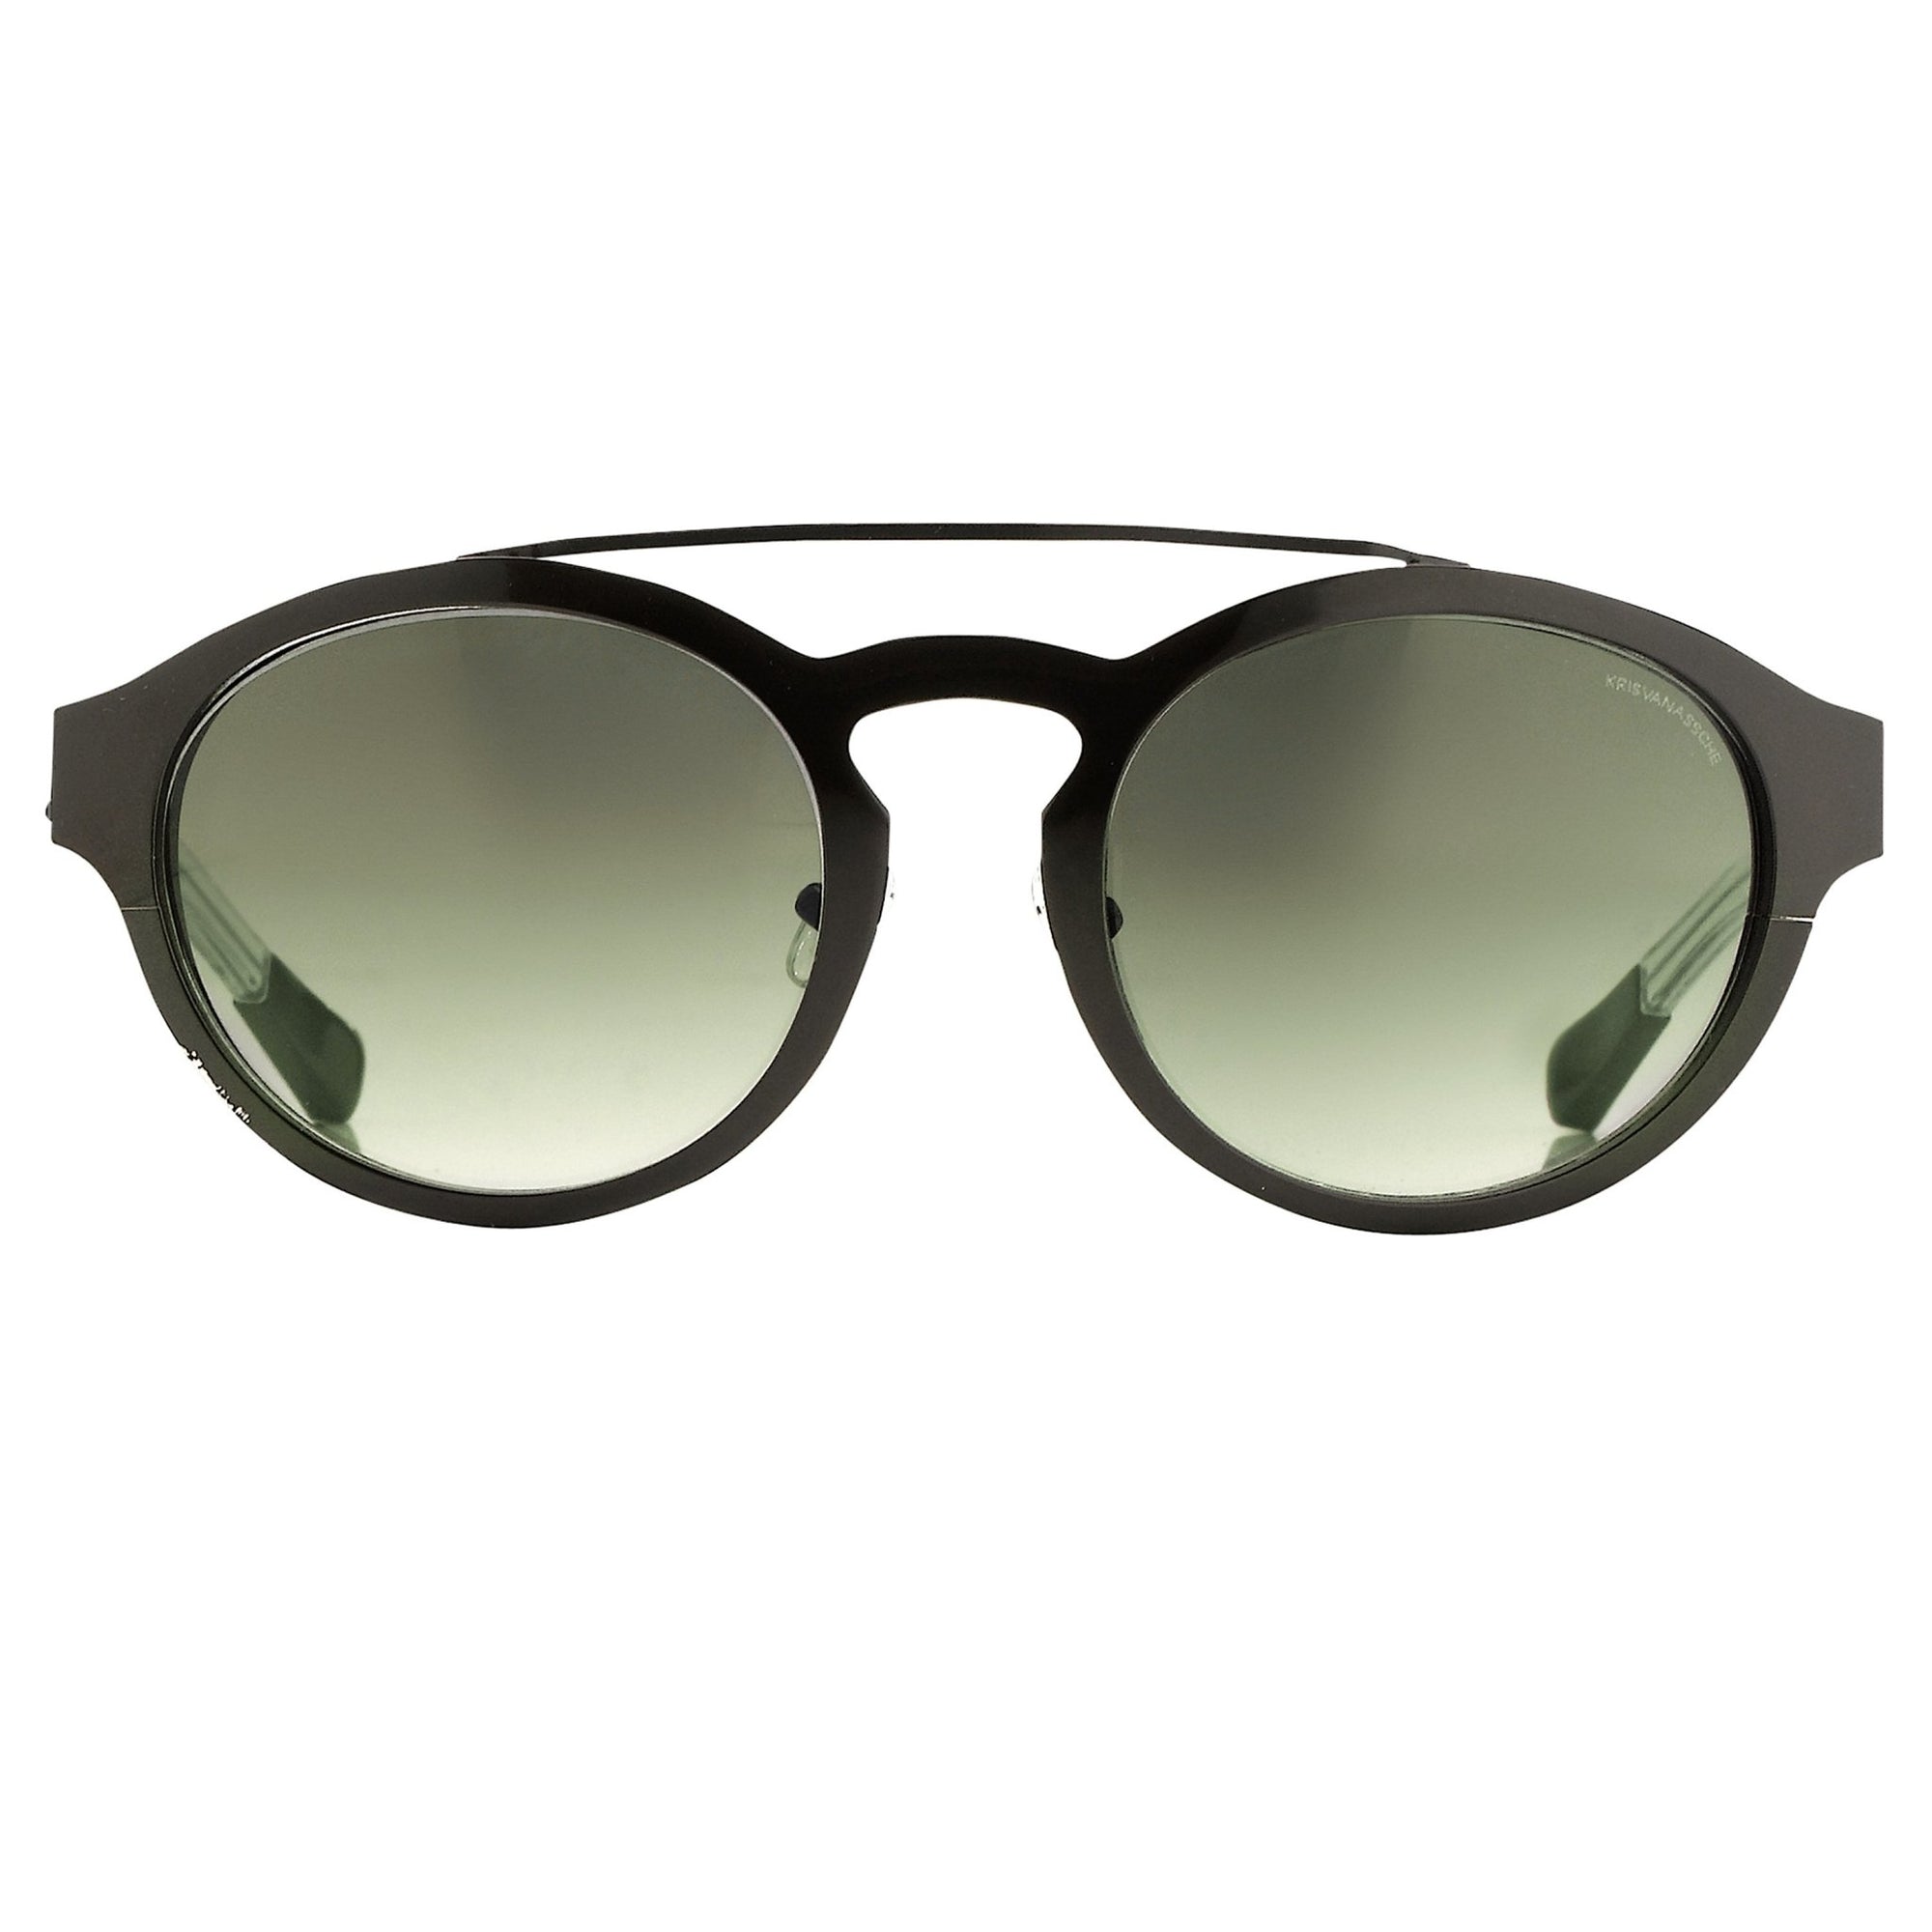 kris van assche sunglasses unisex with oval black metal and green graduated lenses kva4c2sun